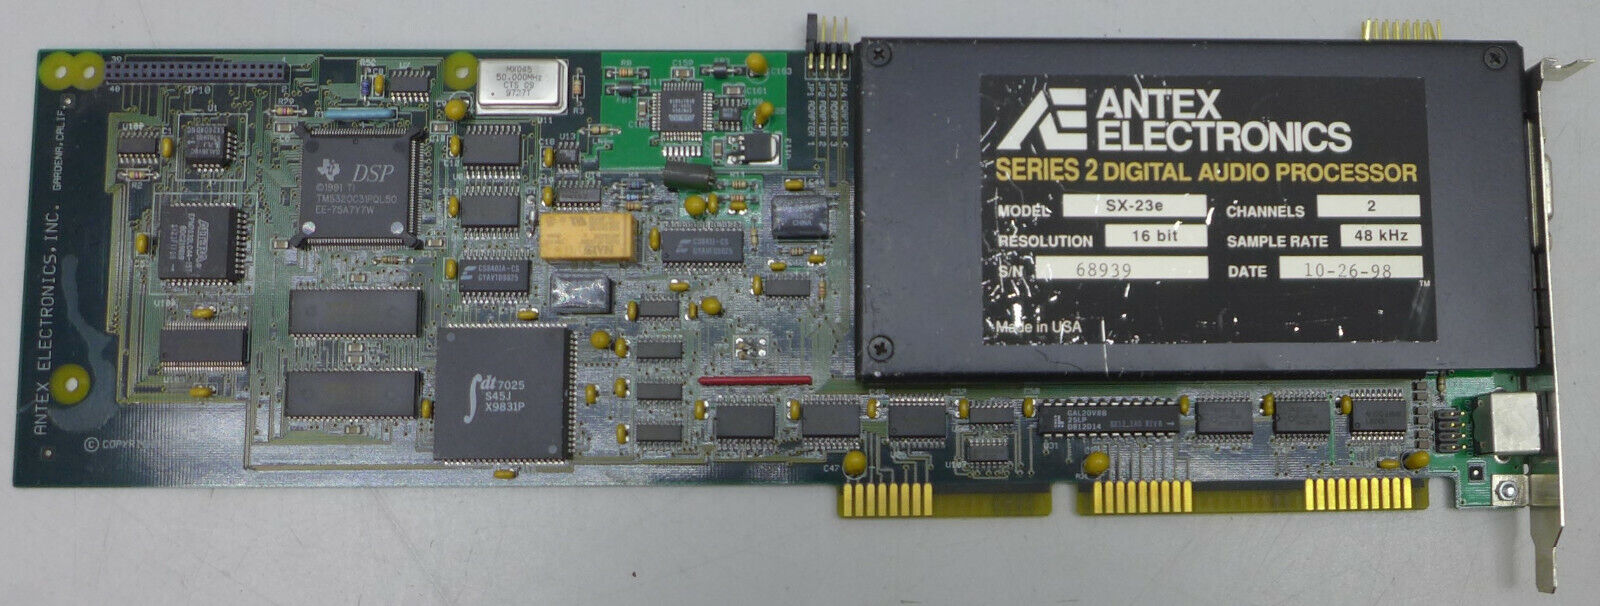 Antex Electronics SX-23e Series 2 Digital Audio Processor